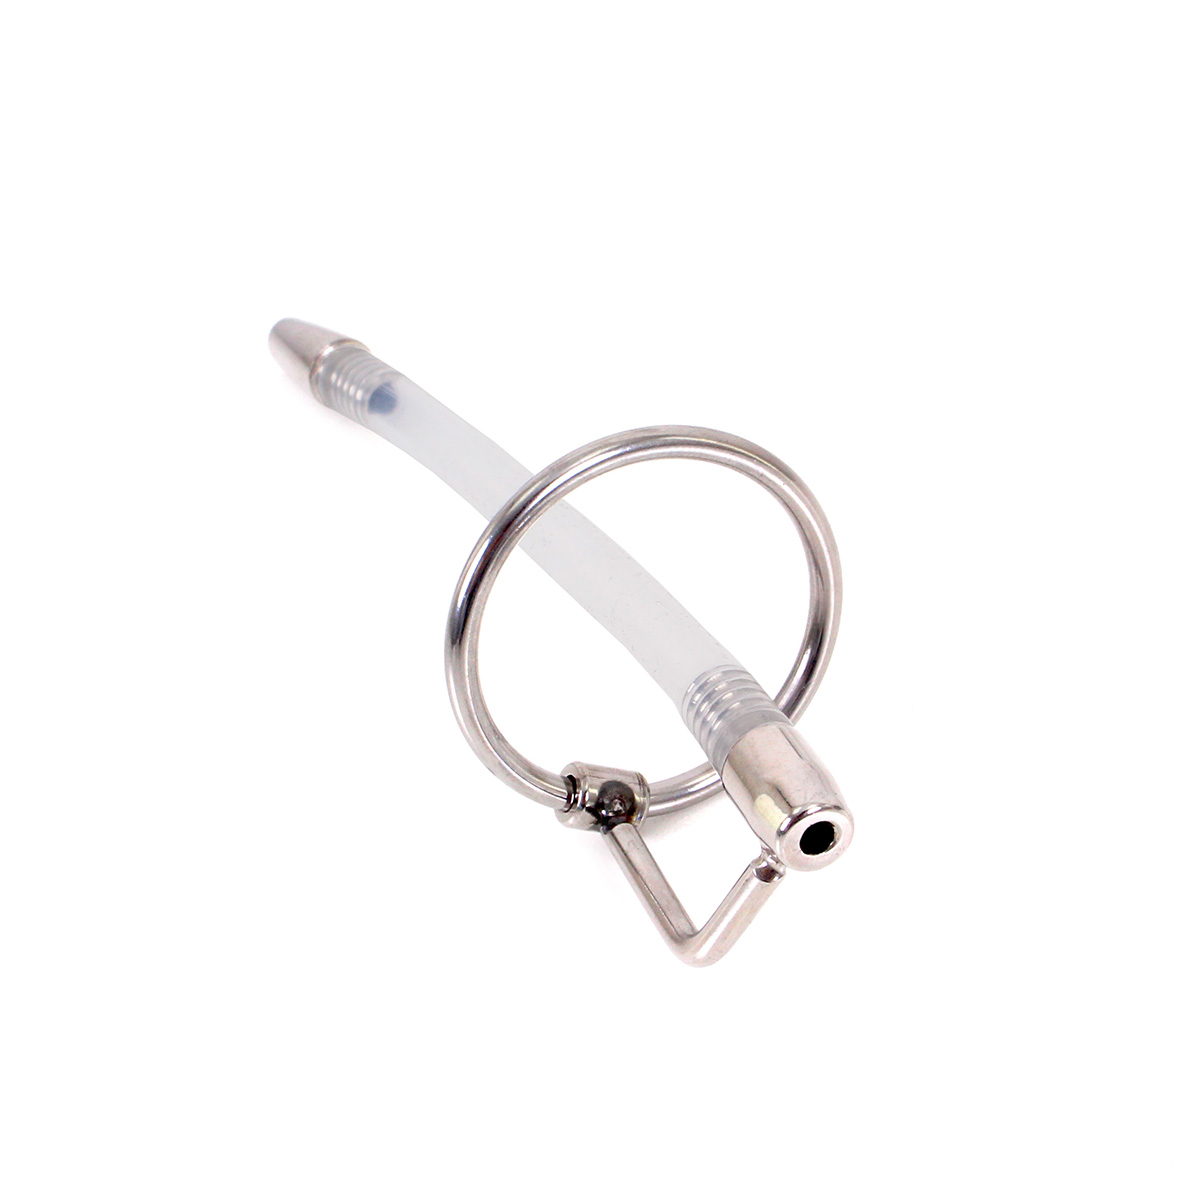 Urethral-Catheter-Medium-Plug-OPR-3330035-1